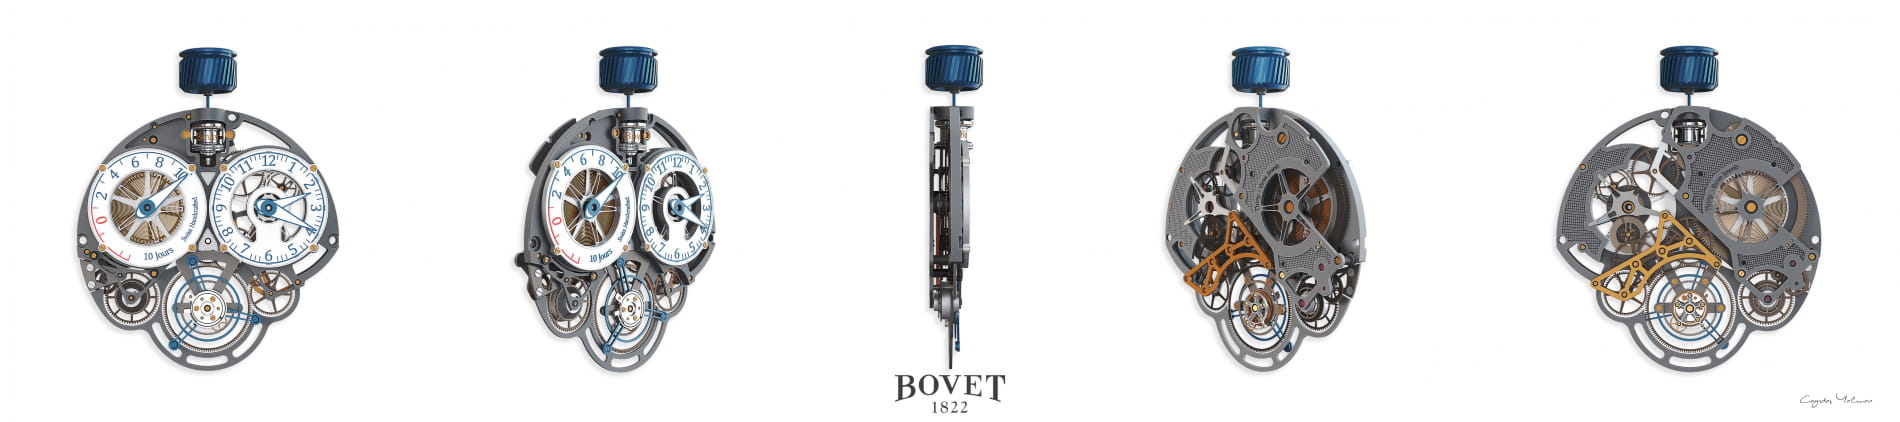 bovet-1822-pininfarina-ottantasei